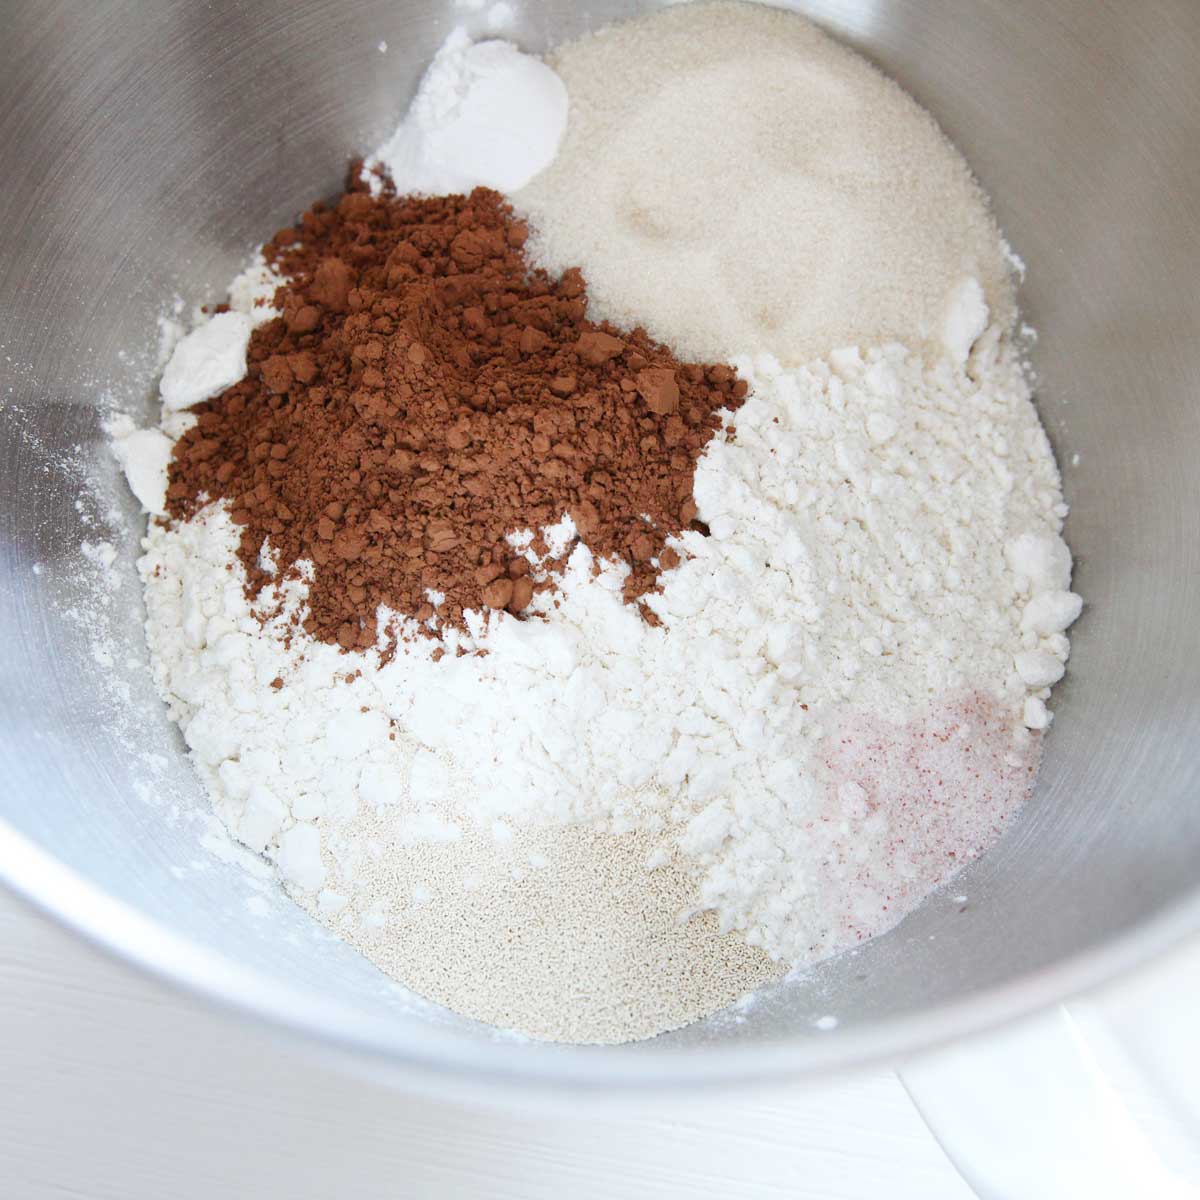 Chocolate Steamed Buns (Easy, Vegan-Friendly Recipe) - Chocolate Steamed Buns